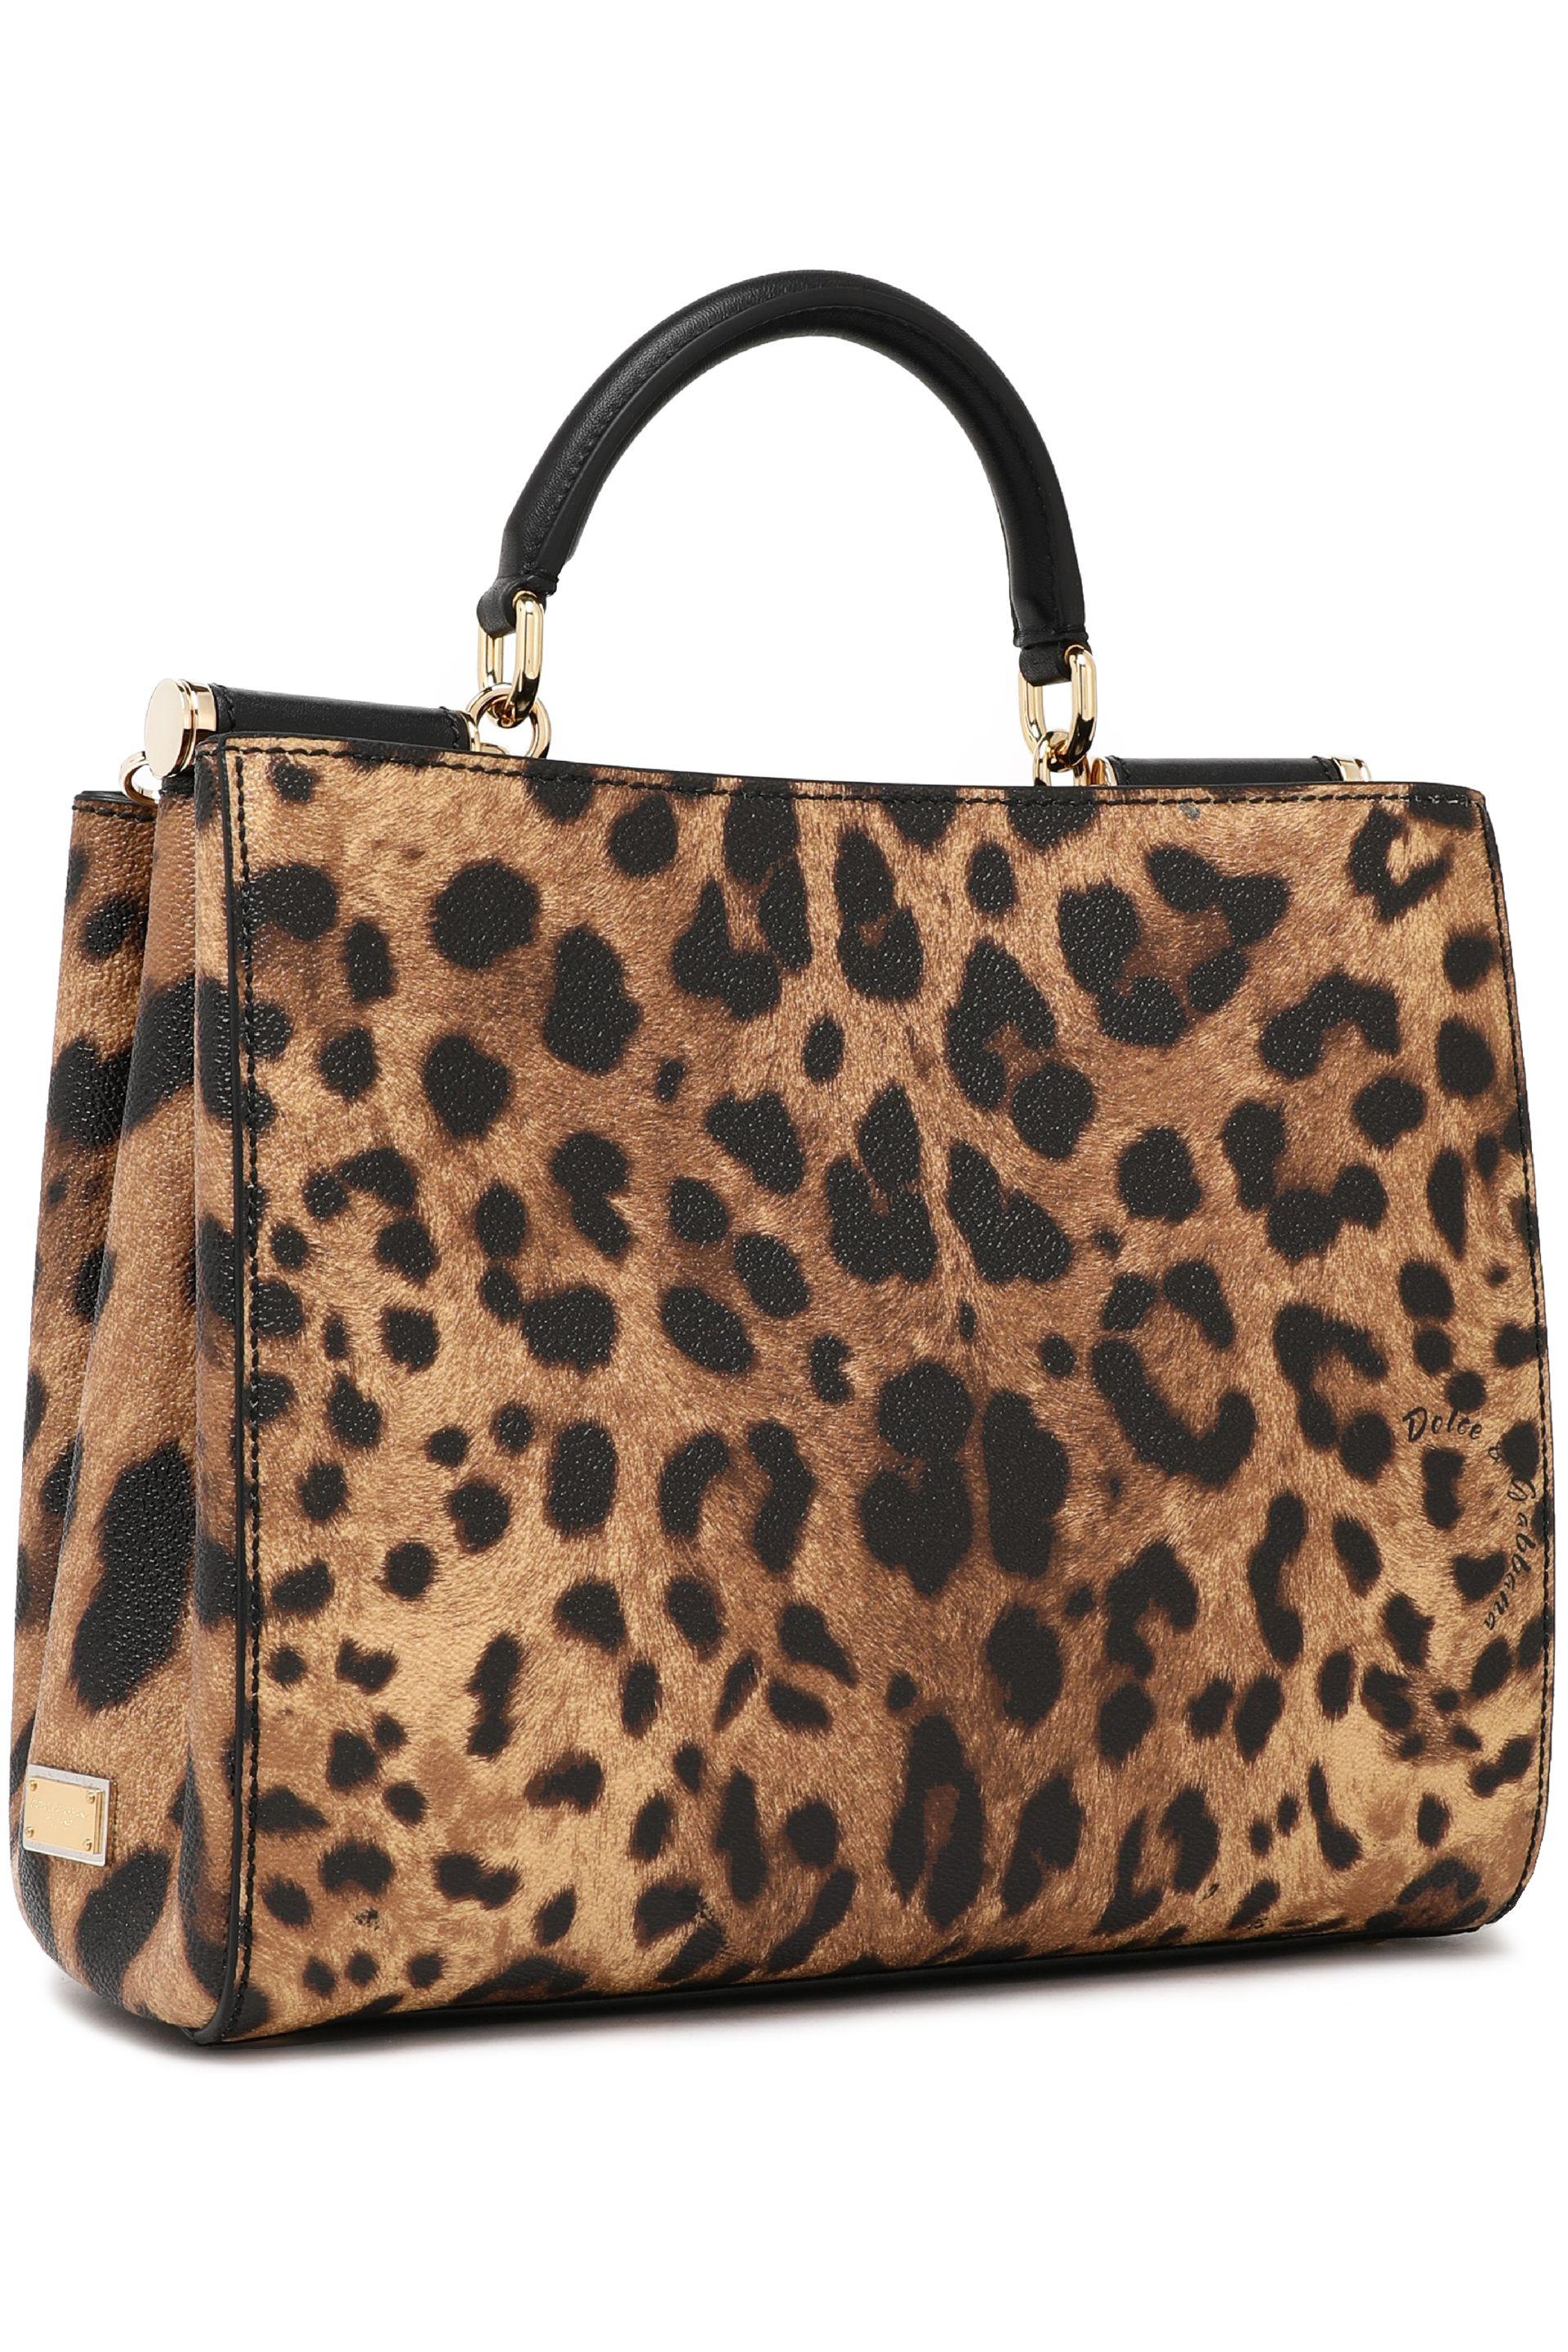 Lyst - Dolce & Gabbana Leopard-print Textured-leather Shoulder Bag in Brown